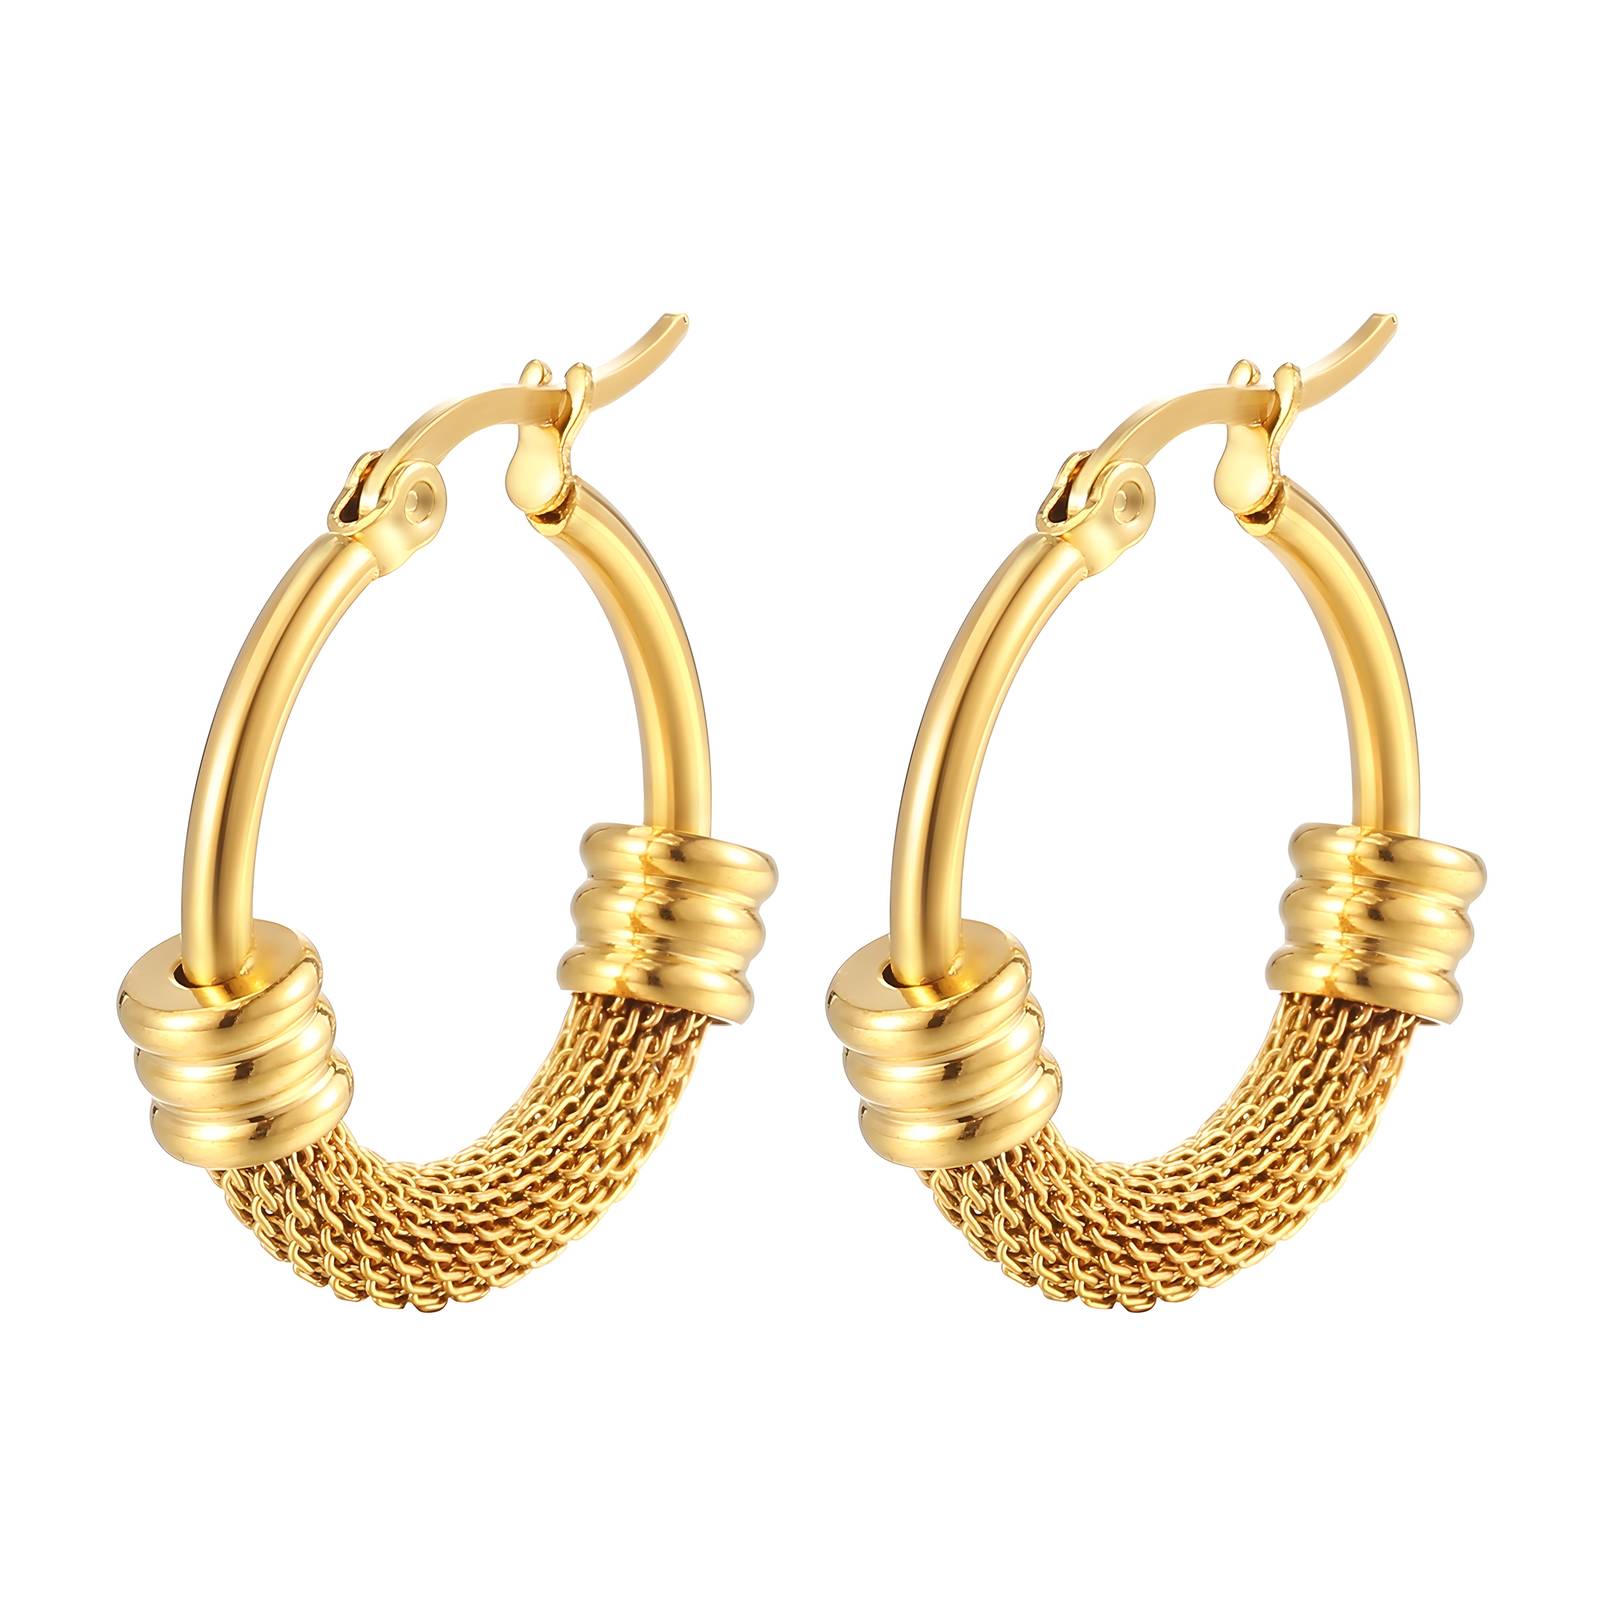 18K gold plated Stainless steel earrings, Intensity SKU #87228-0 ...